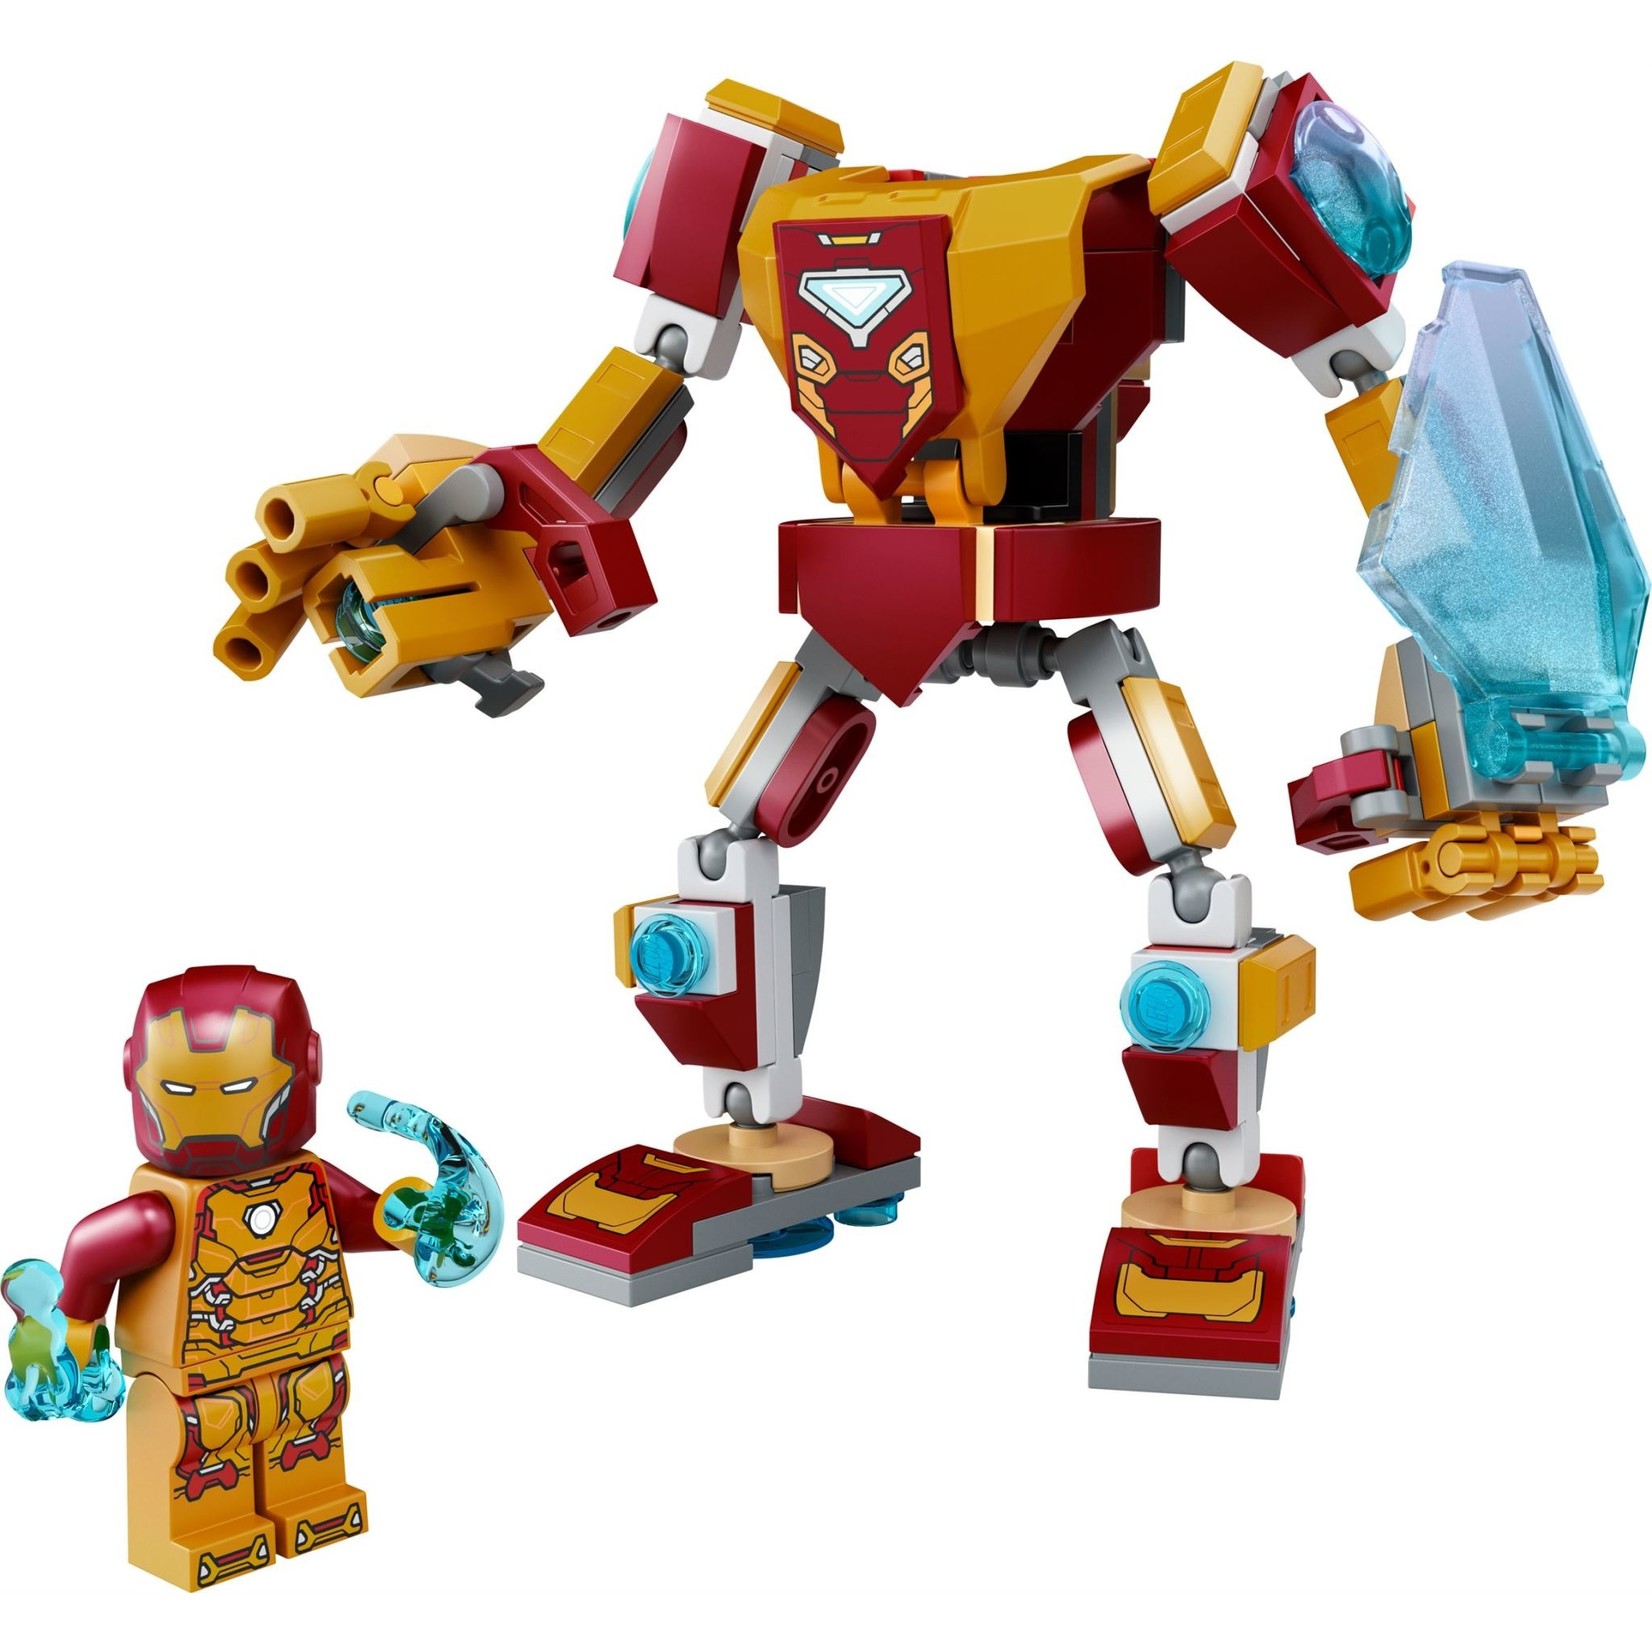 LEGO 76203 LEGO® Marvel Iron Man Mech Armor